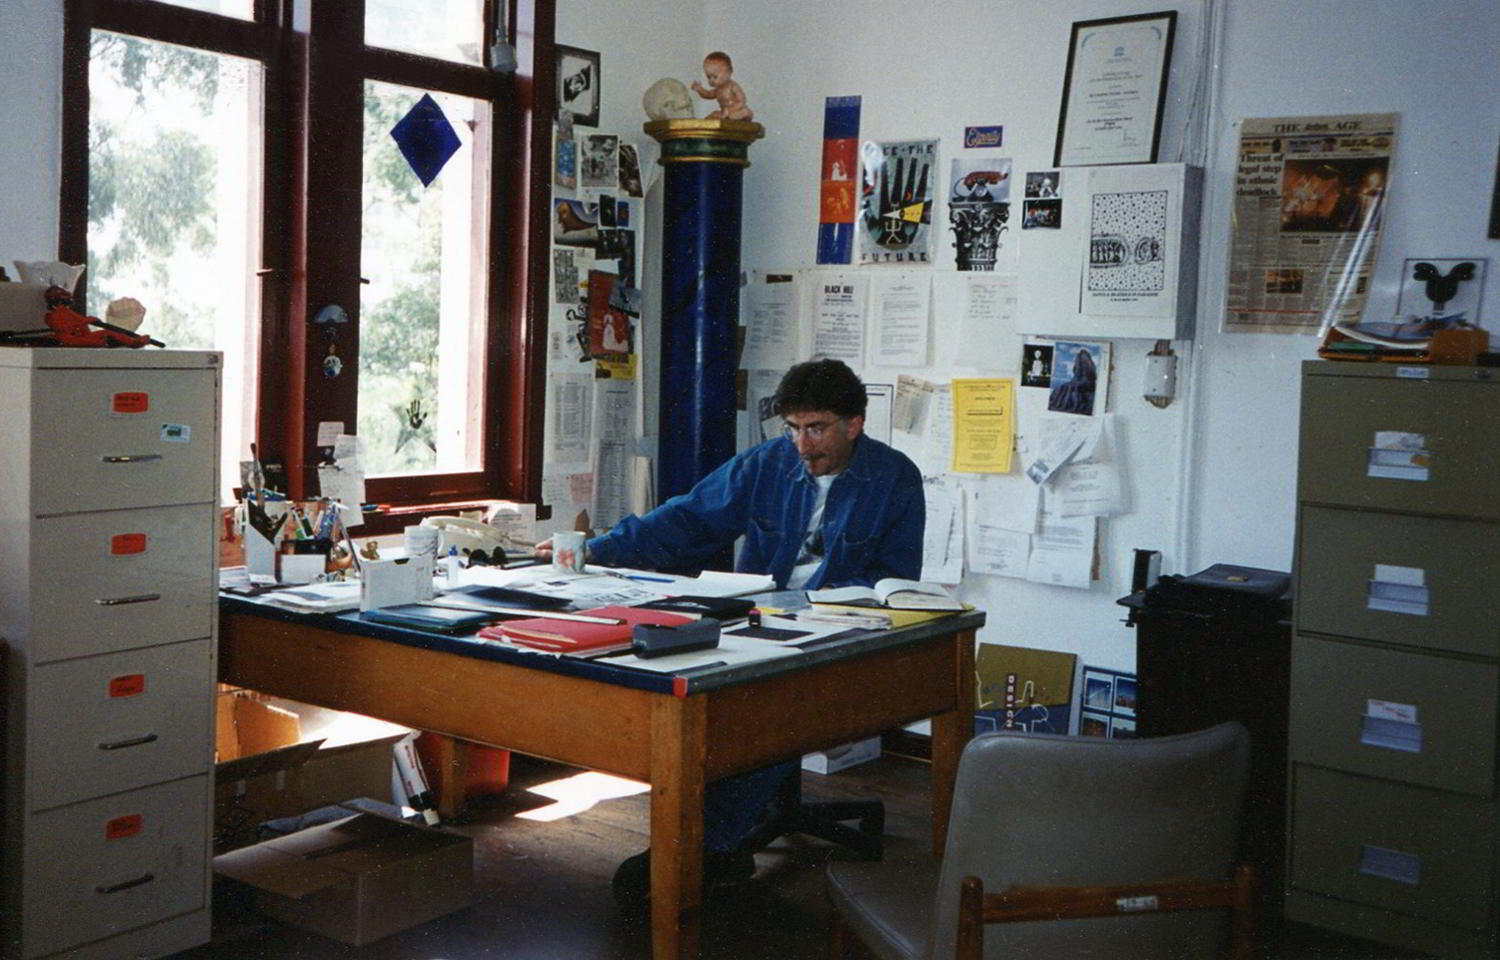 Ken Evans, Handspan Theatre, Artistic Director seated at a desk